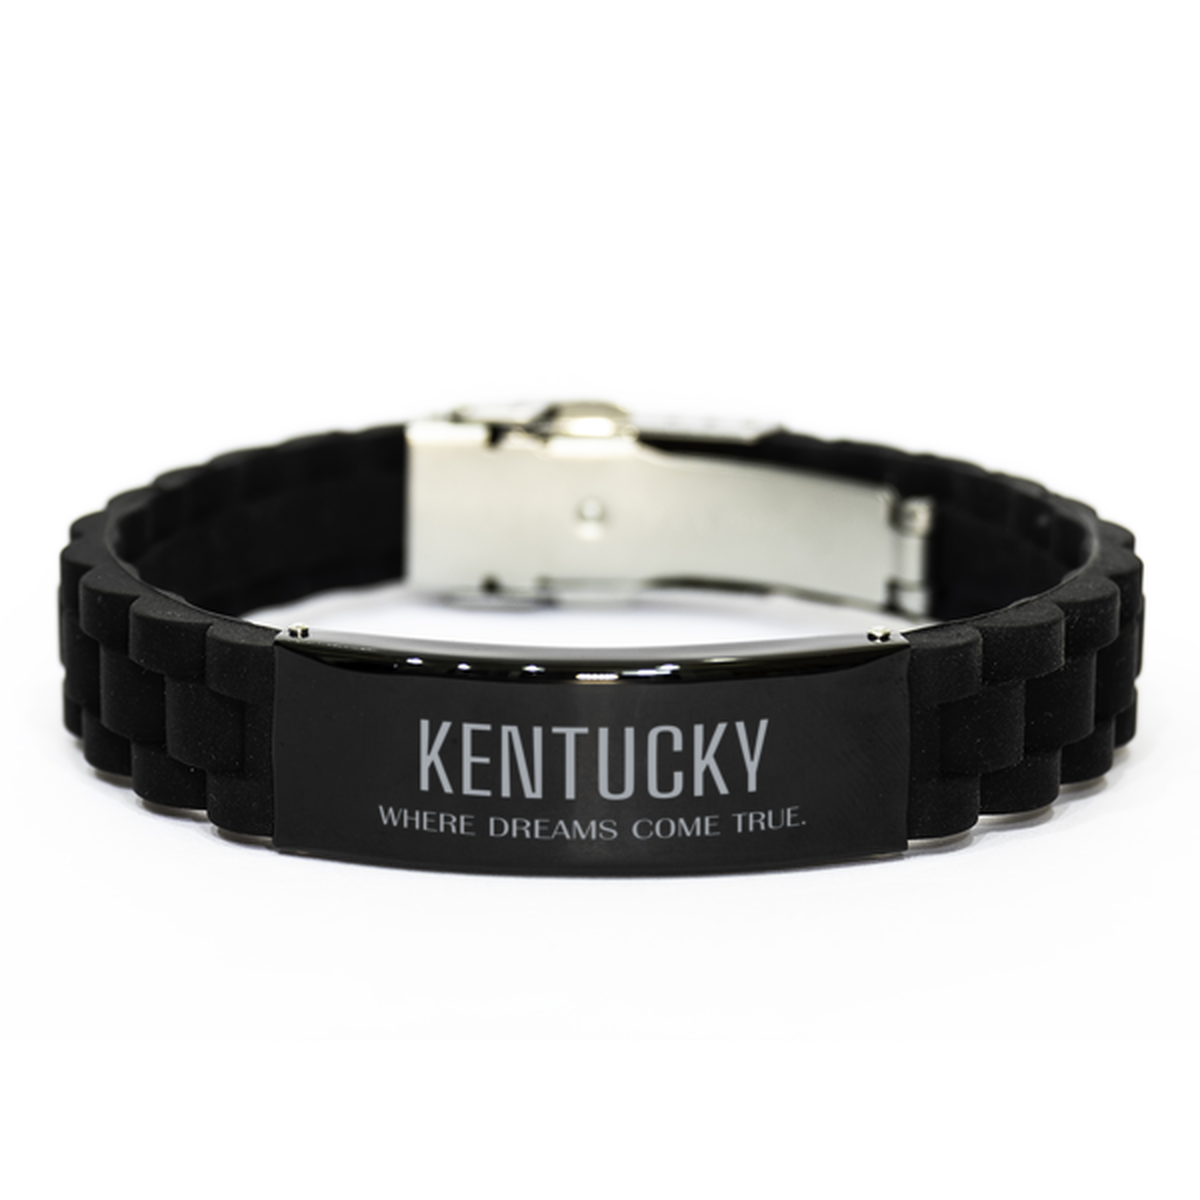 Love Kentucky State Black Glidelock Clasp Bracelet, Kentucky Where dreams come true, Birthday Inspirational Gifts For Kentucky Men, Women, Friends